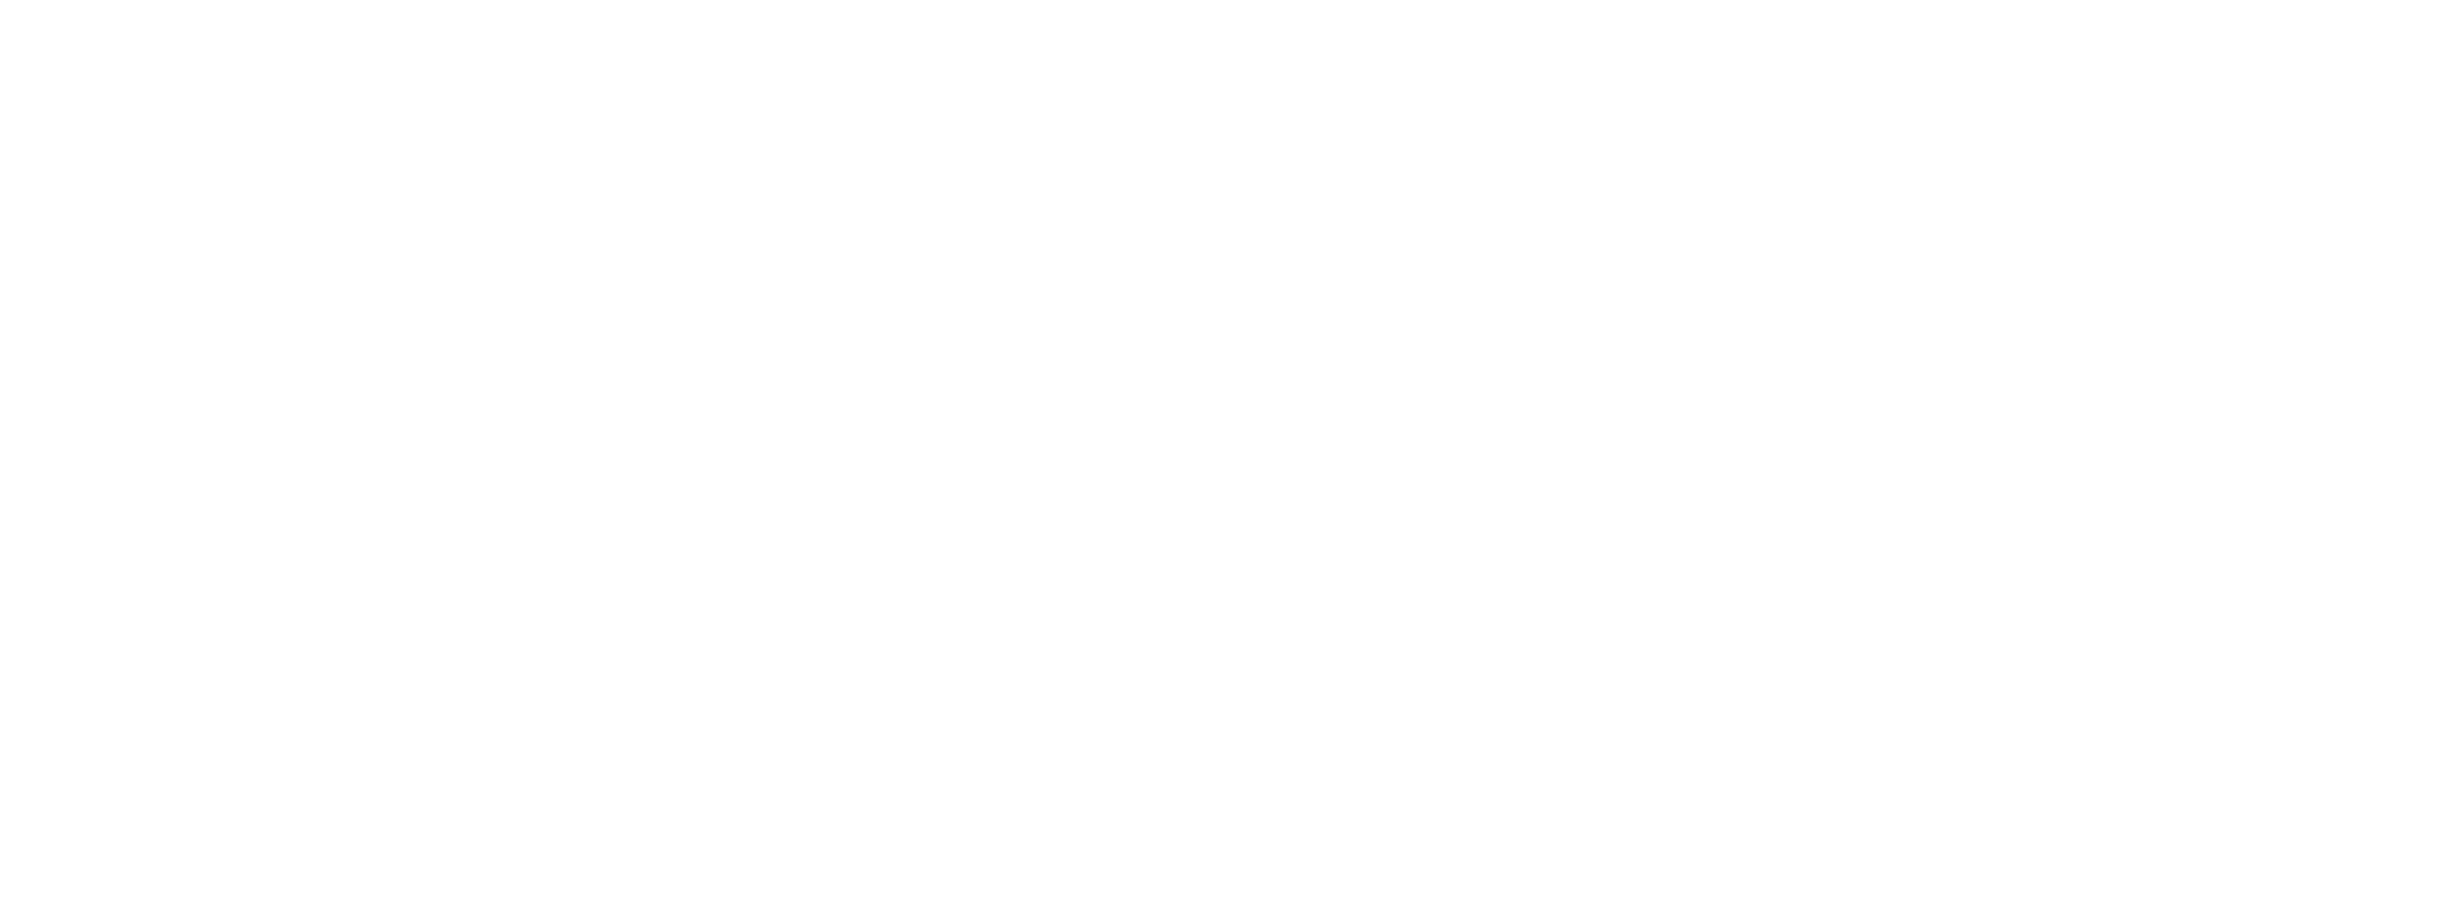 Miit&links logo